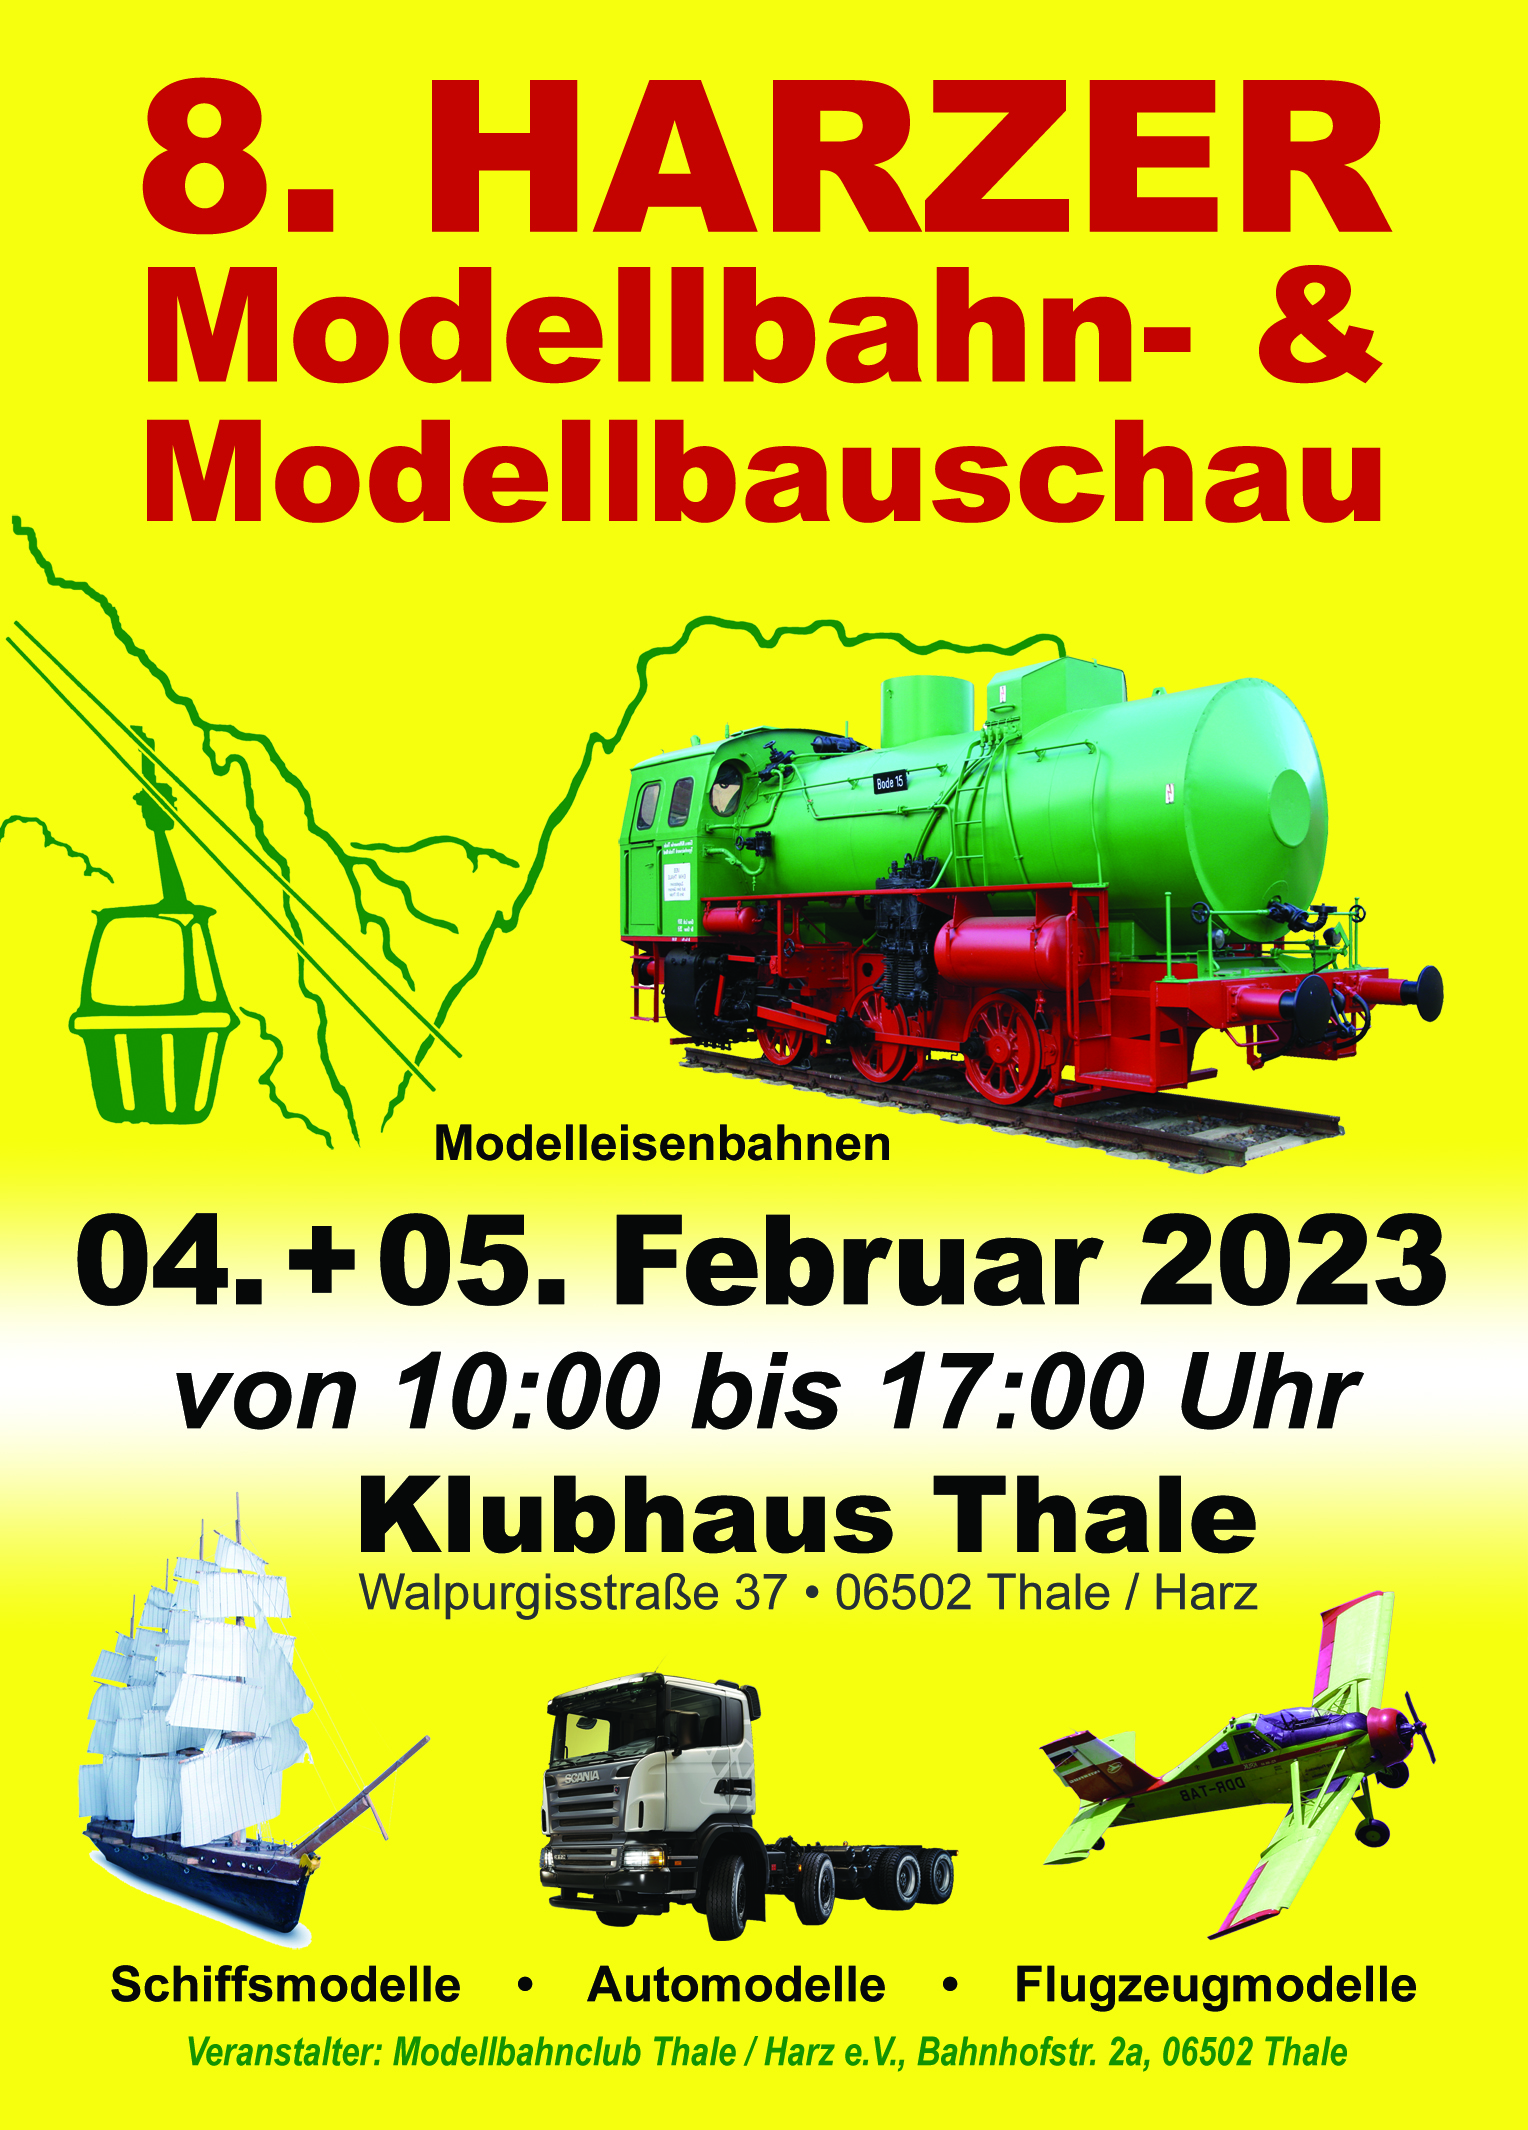 8. Harzer Modellbahn- & Modellbauschau